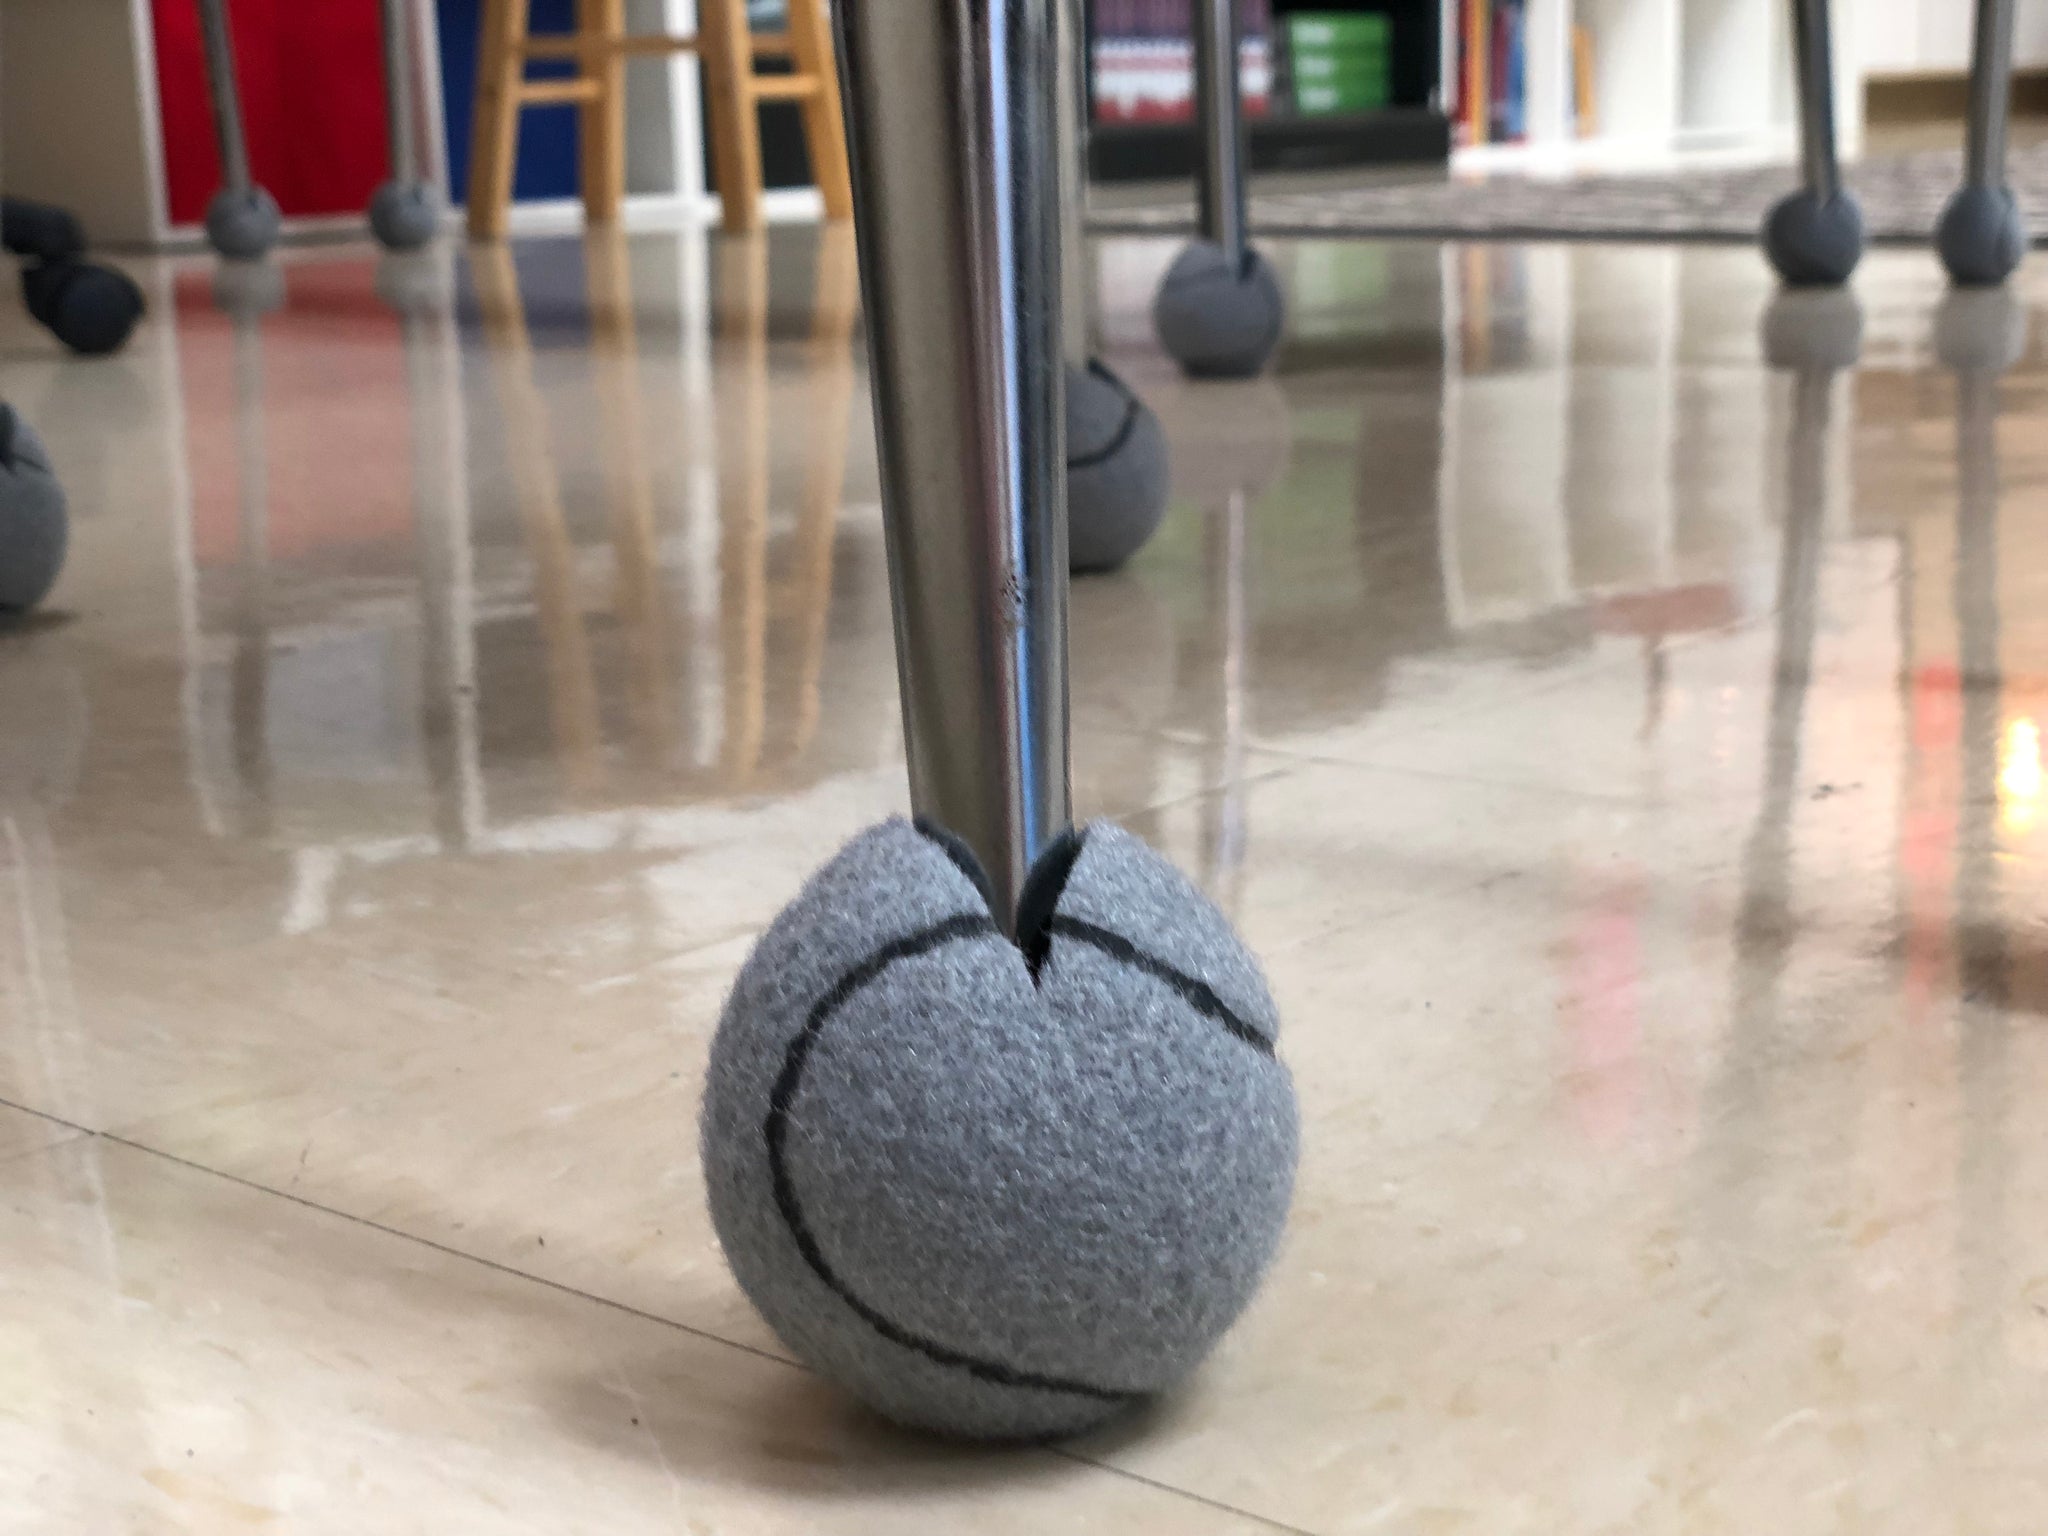 Medium (Racquetball Size) Furniture Balls - Grey - 5000 Count